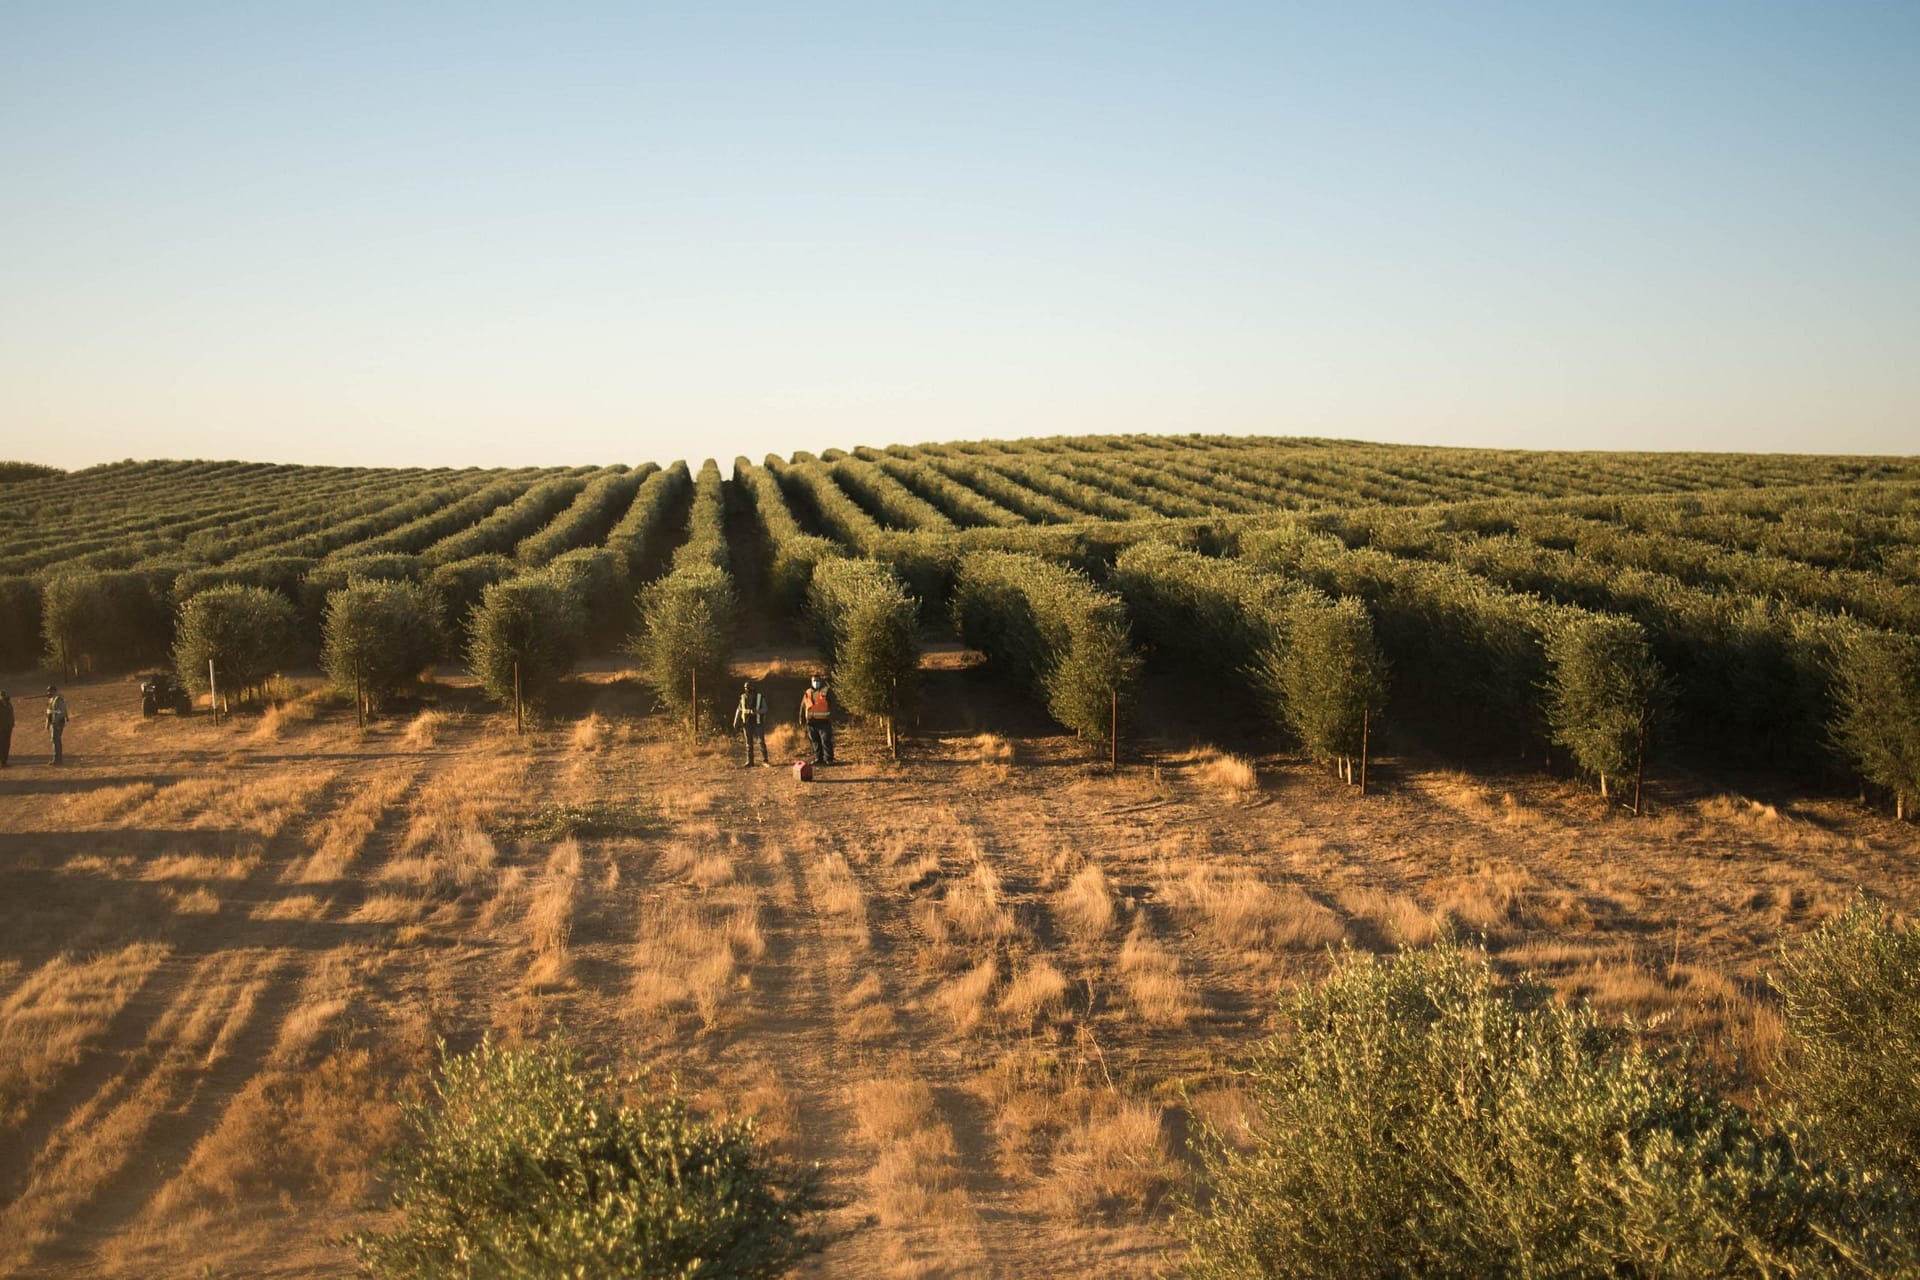 sjeverna-amerika-najbolja-maslinova-ulja-natjecanja-proizvodnja-californians-navigate-a-challenging-harvest-with-unwaltering-commitment-to-quality-olive-oil-times